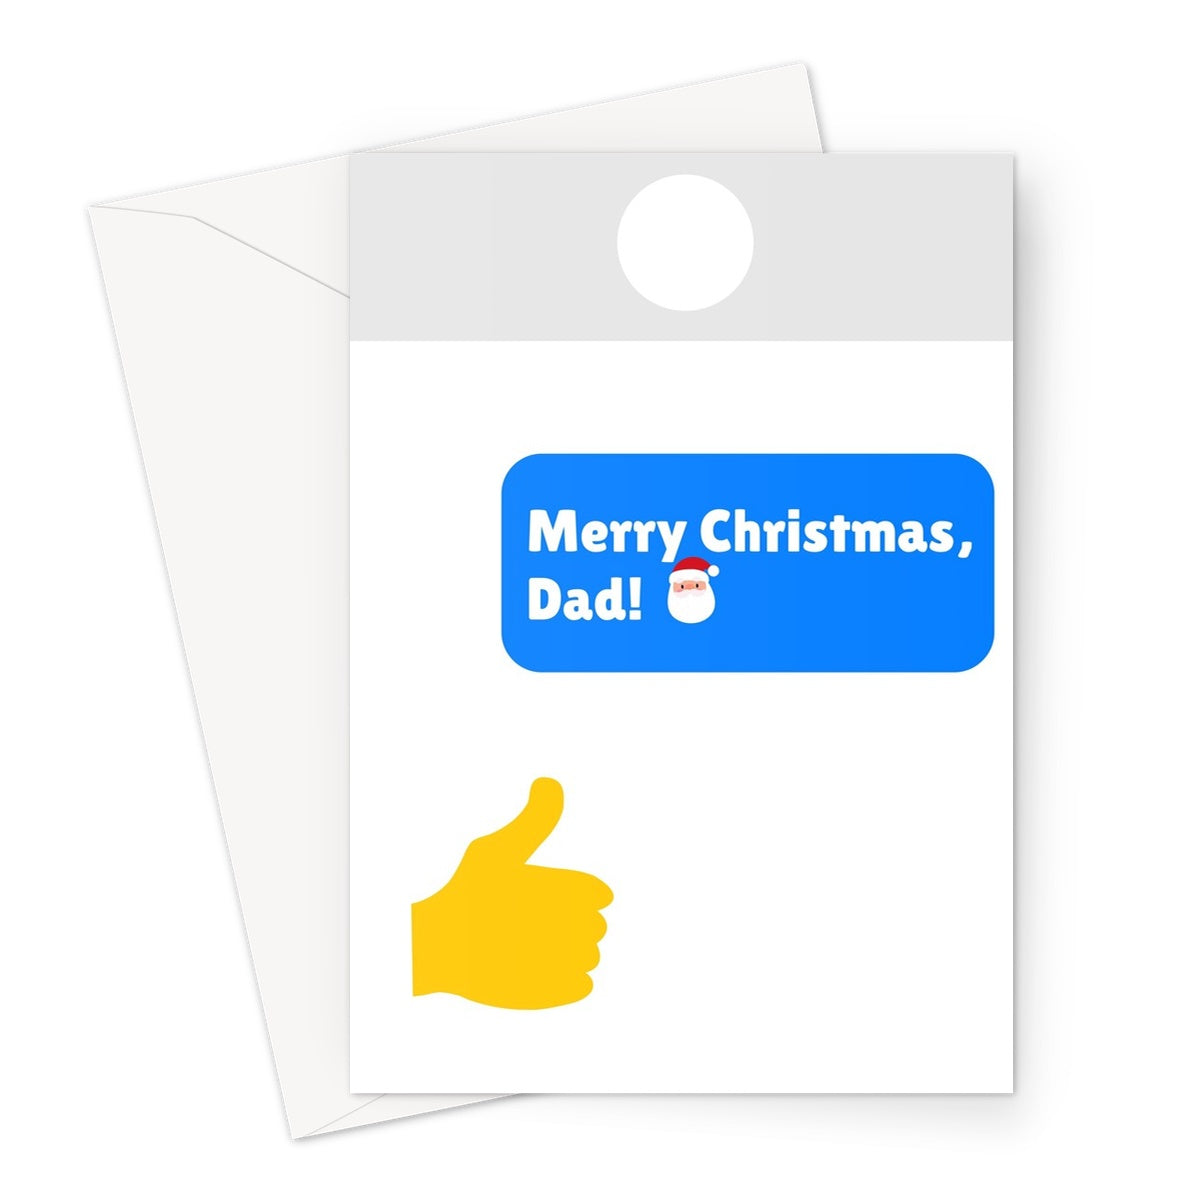 Merry Christmas, Dad! Thumbs Up Text Typical Joke Santa Response Greeting Card